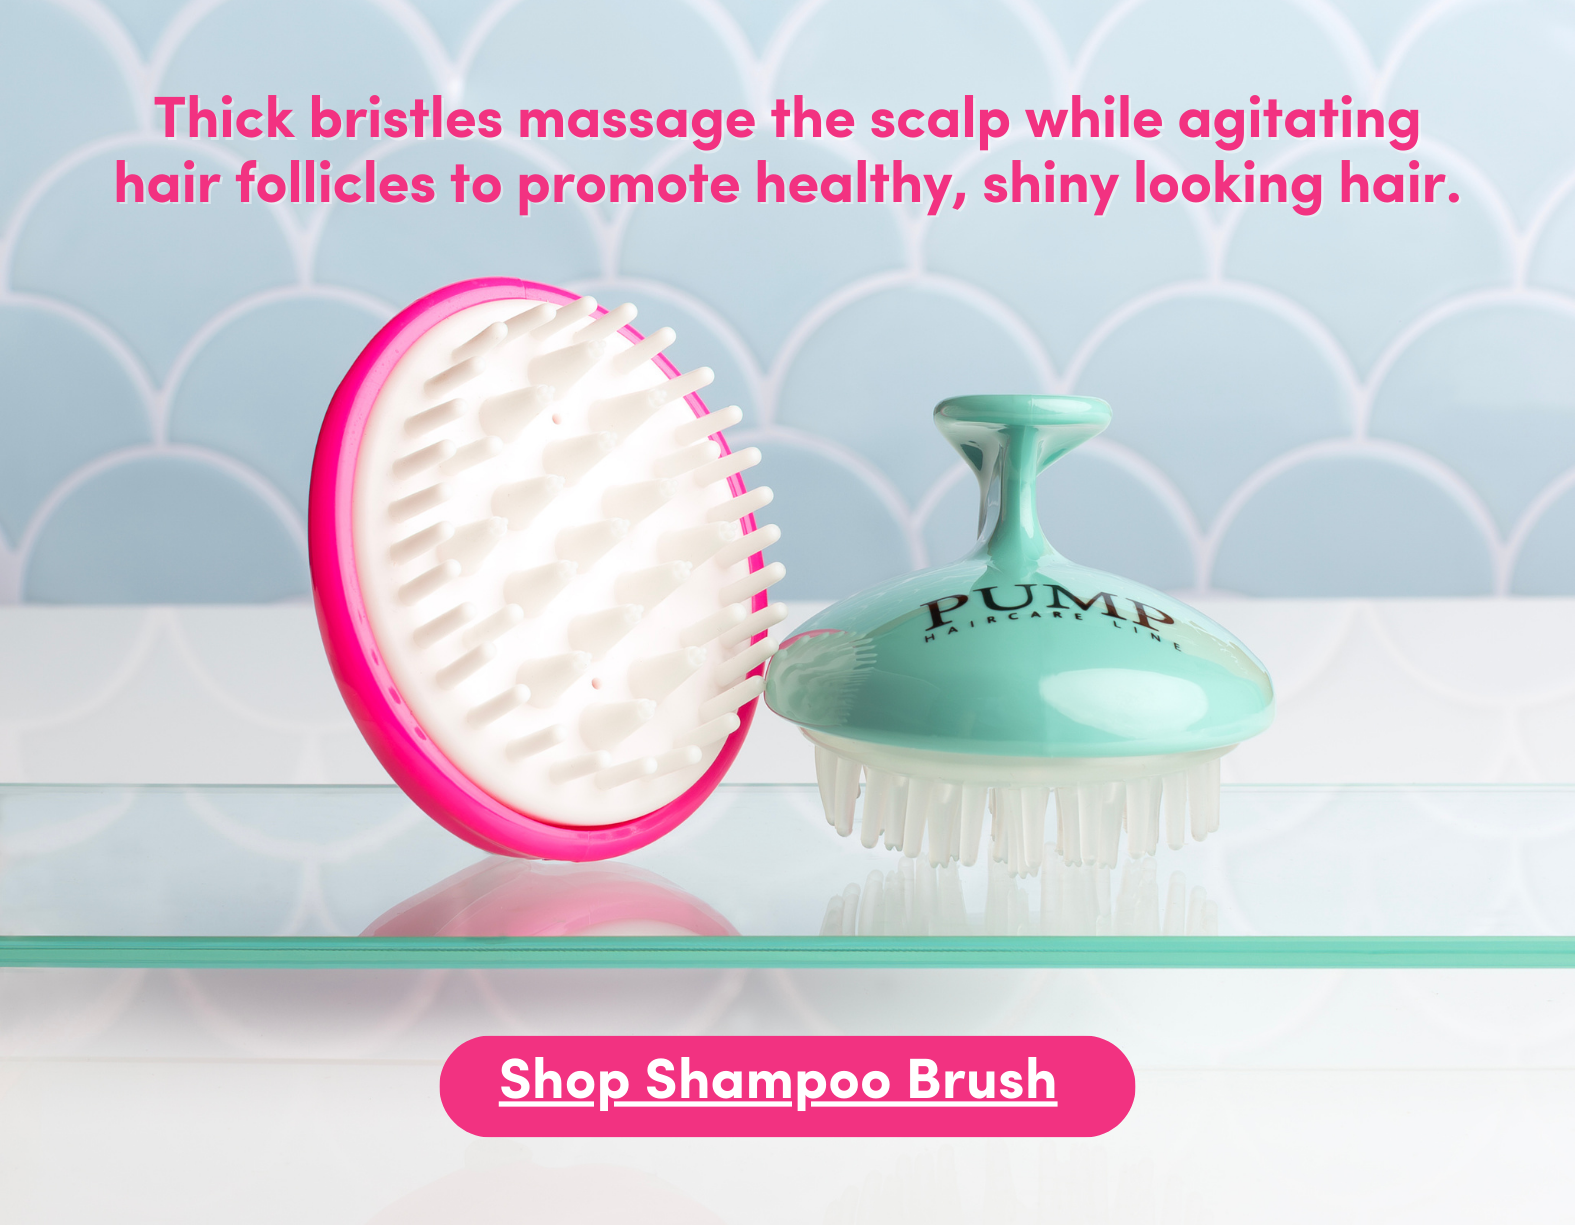 Pump shampoo brush for thickening hair